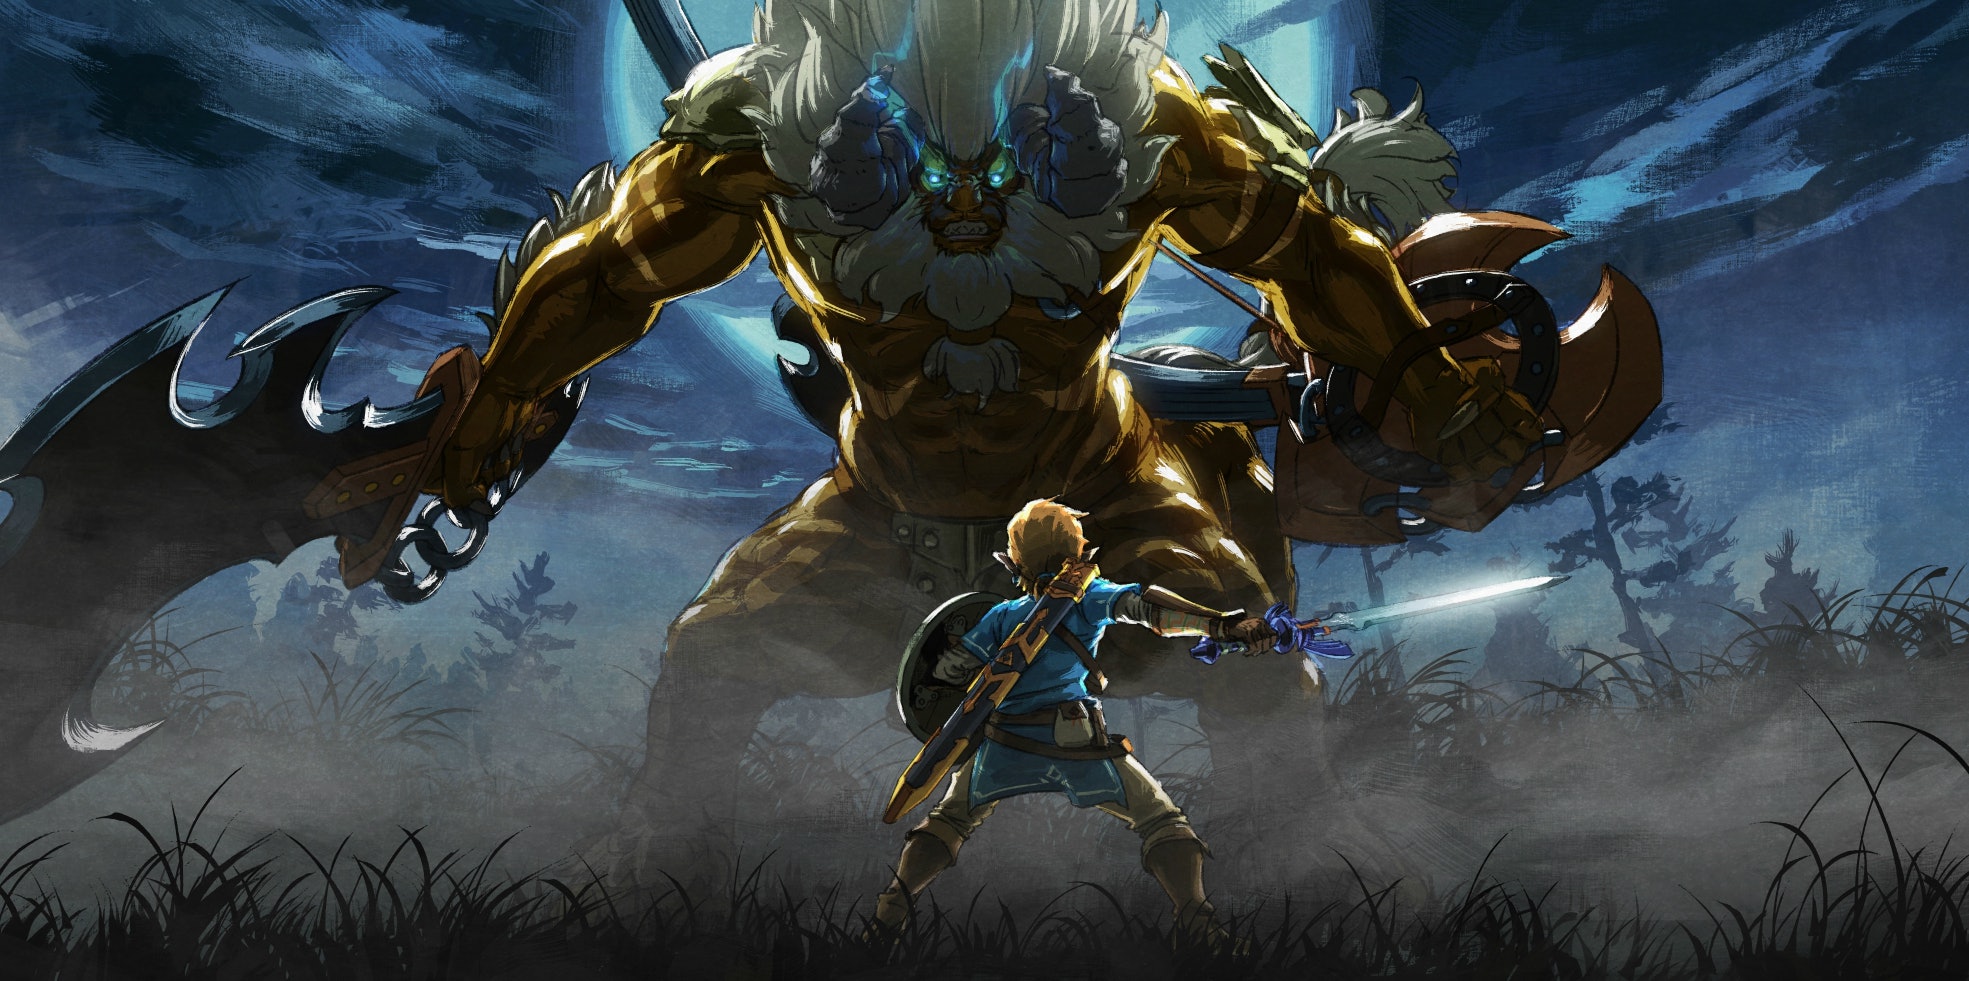 Zelda Breath of the Wild 2 release date confirmed for 2020 launch